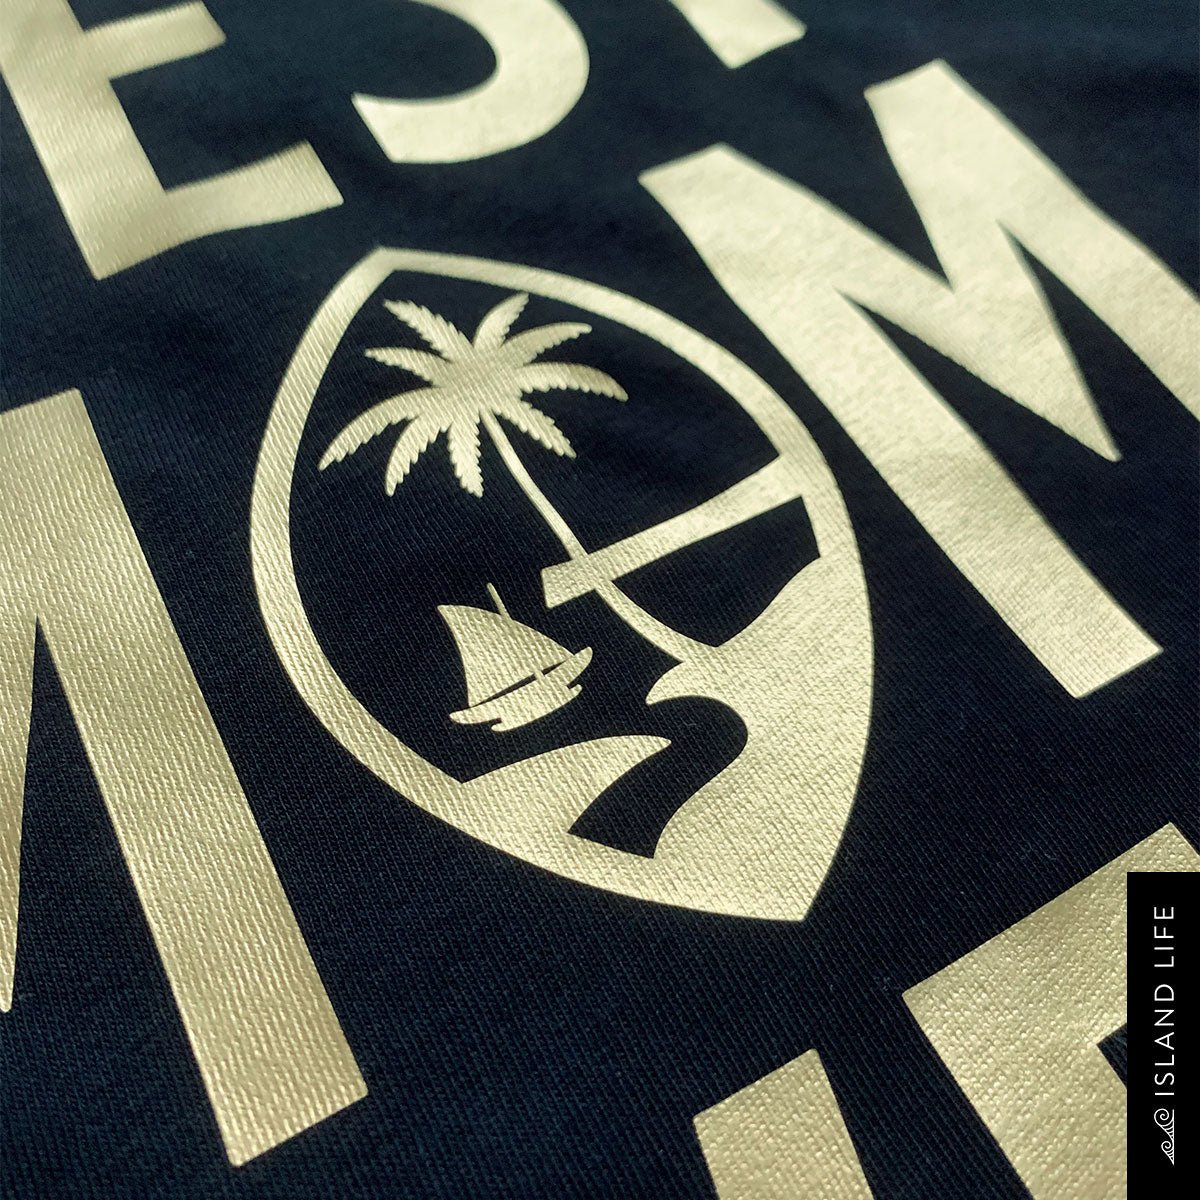 Best Mom Ever Guam Gold Women’s Premium T-Shirt